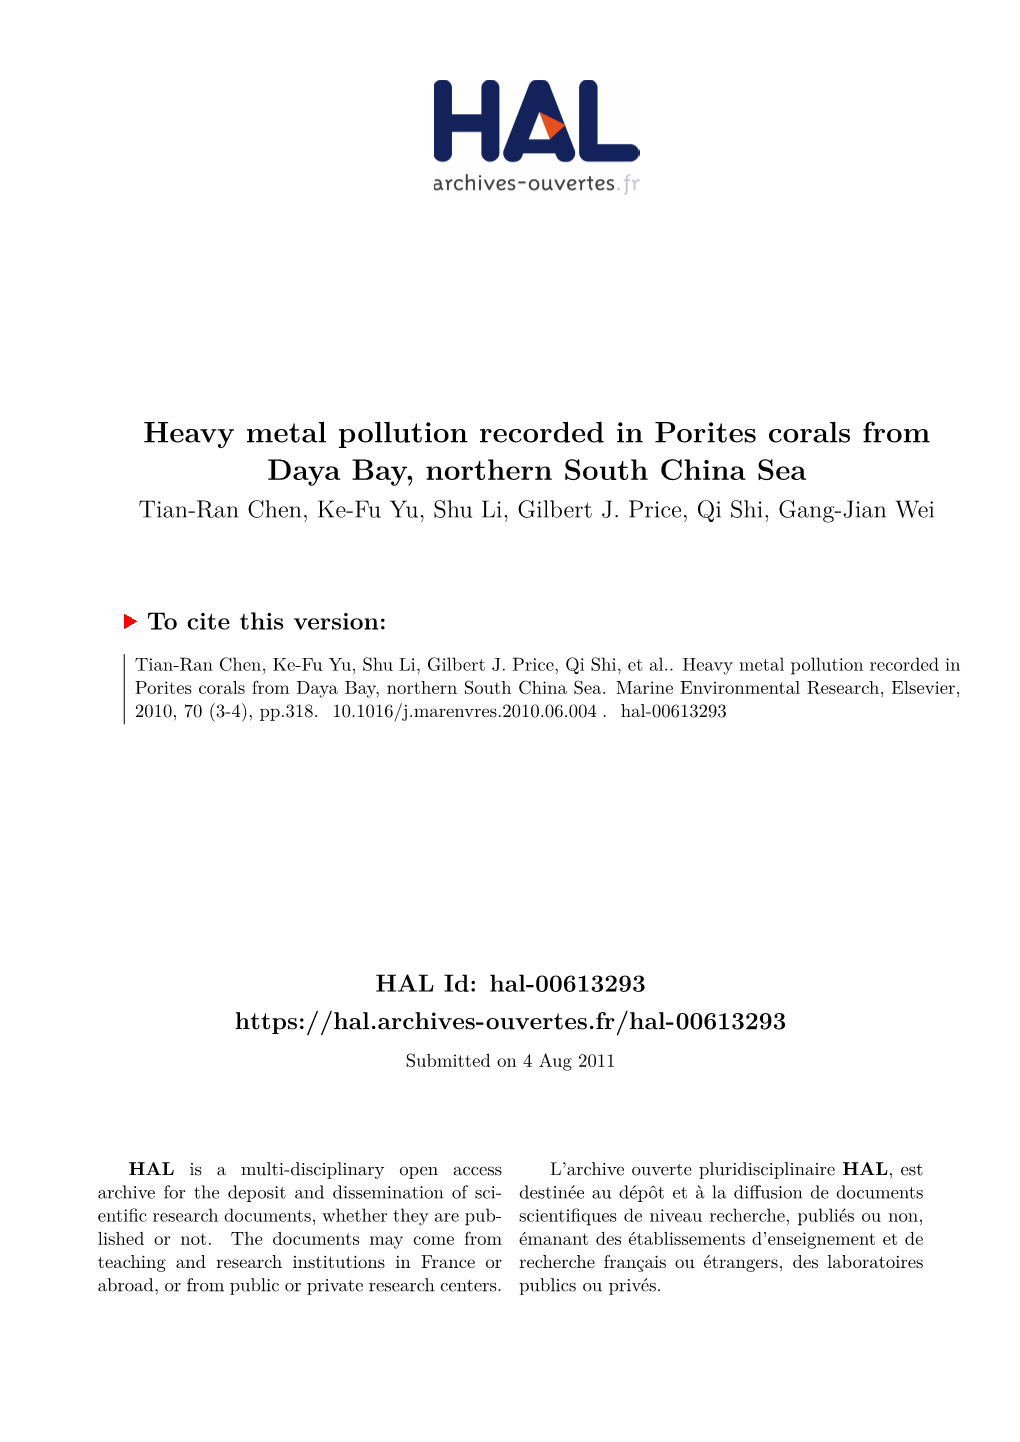 Heavy Metal Pollution Recorded in Porites Corals from Daya Bay, Northern South China Sea Tian-Ran Chen, Ke-Fu Yu, Shu Li, Gilbert J